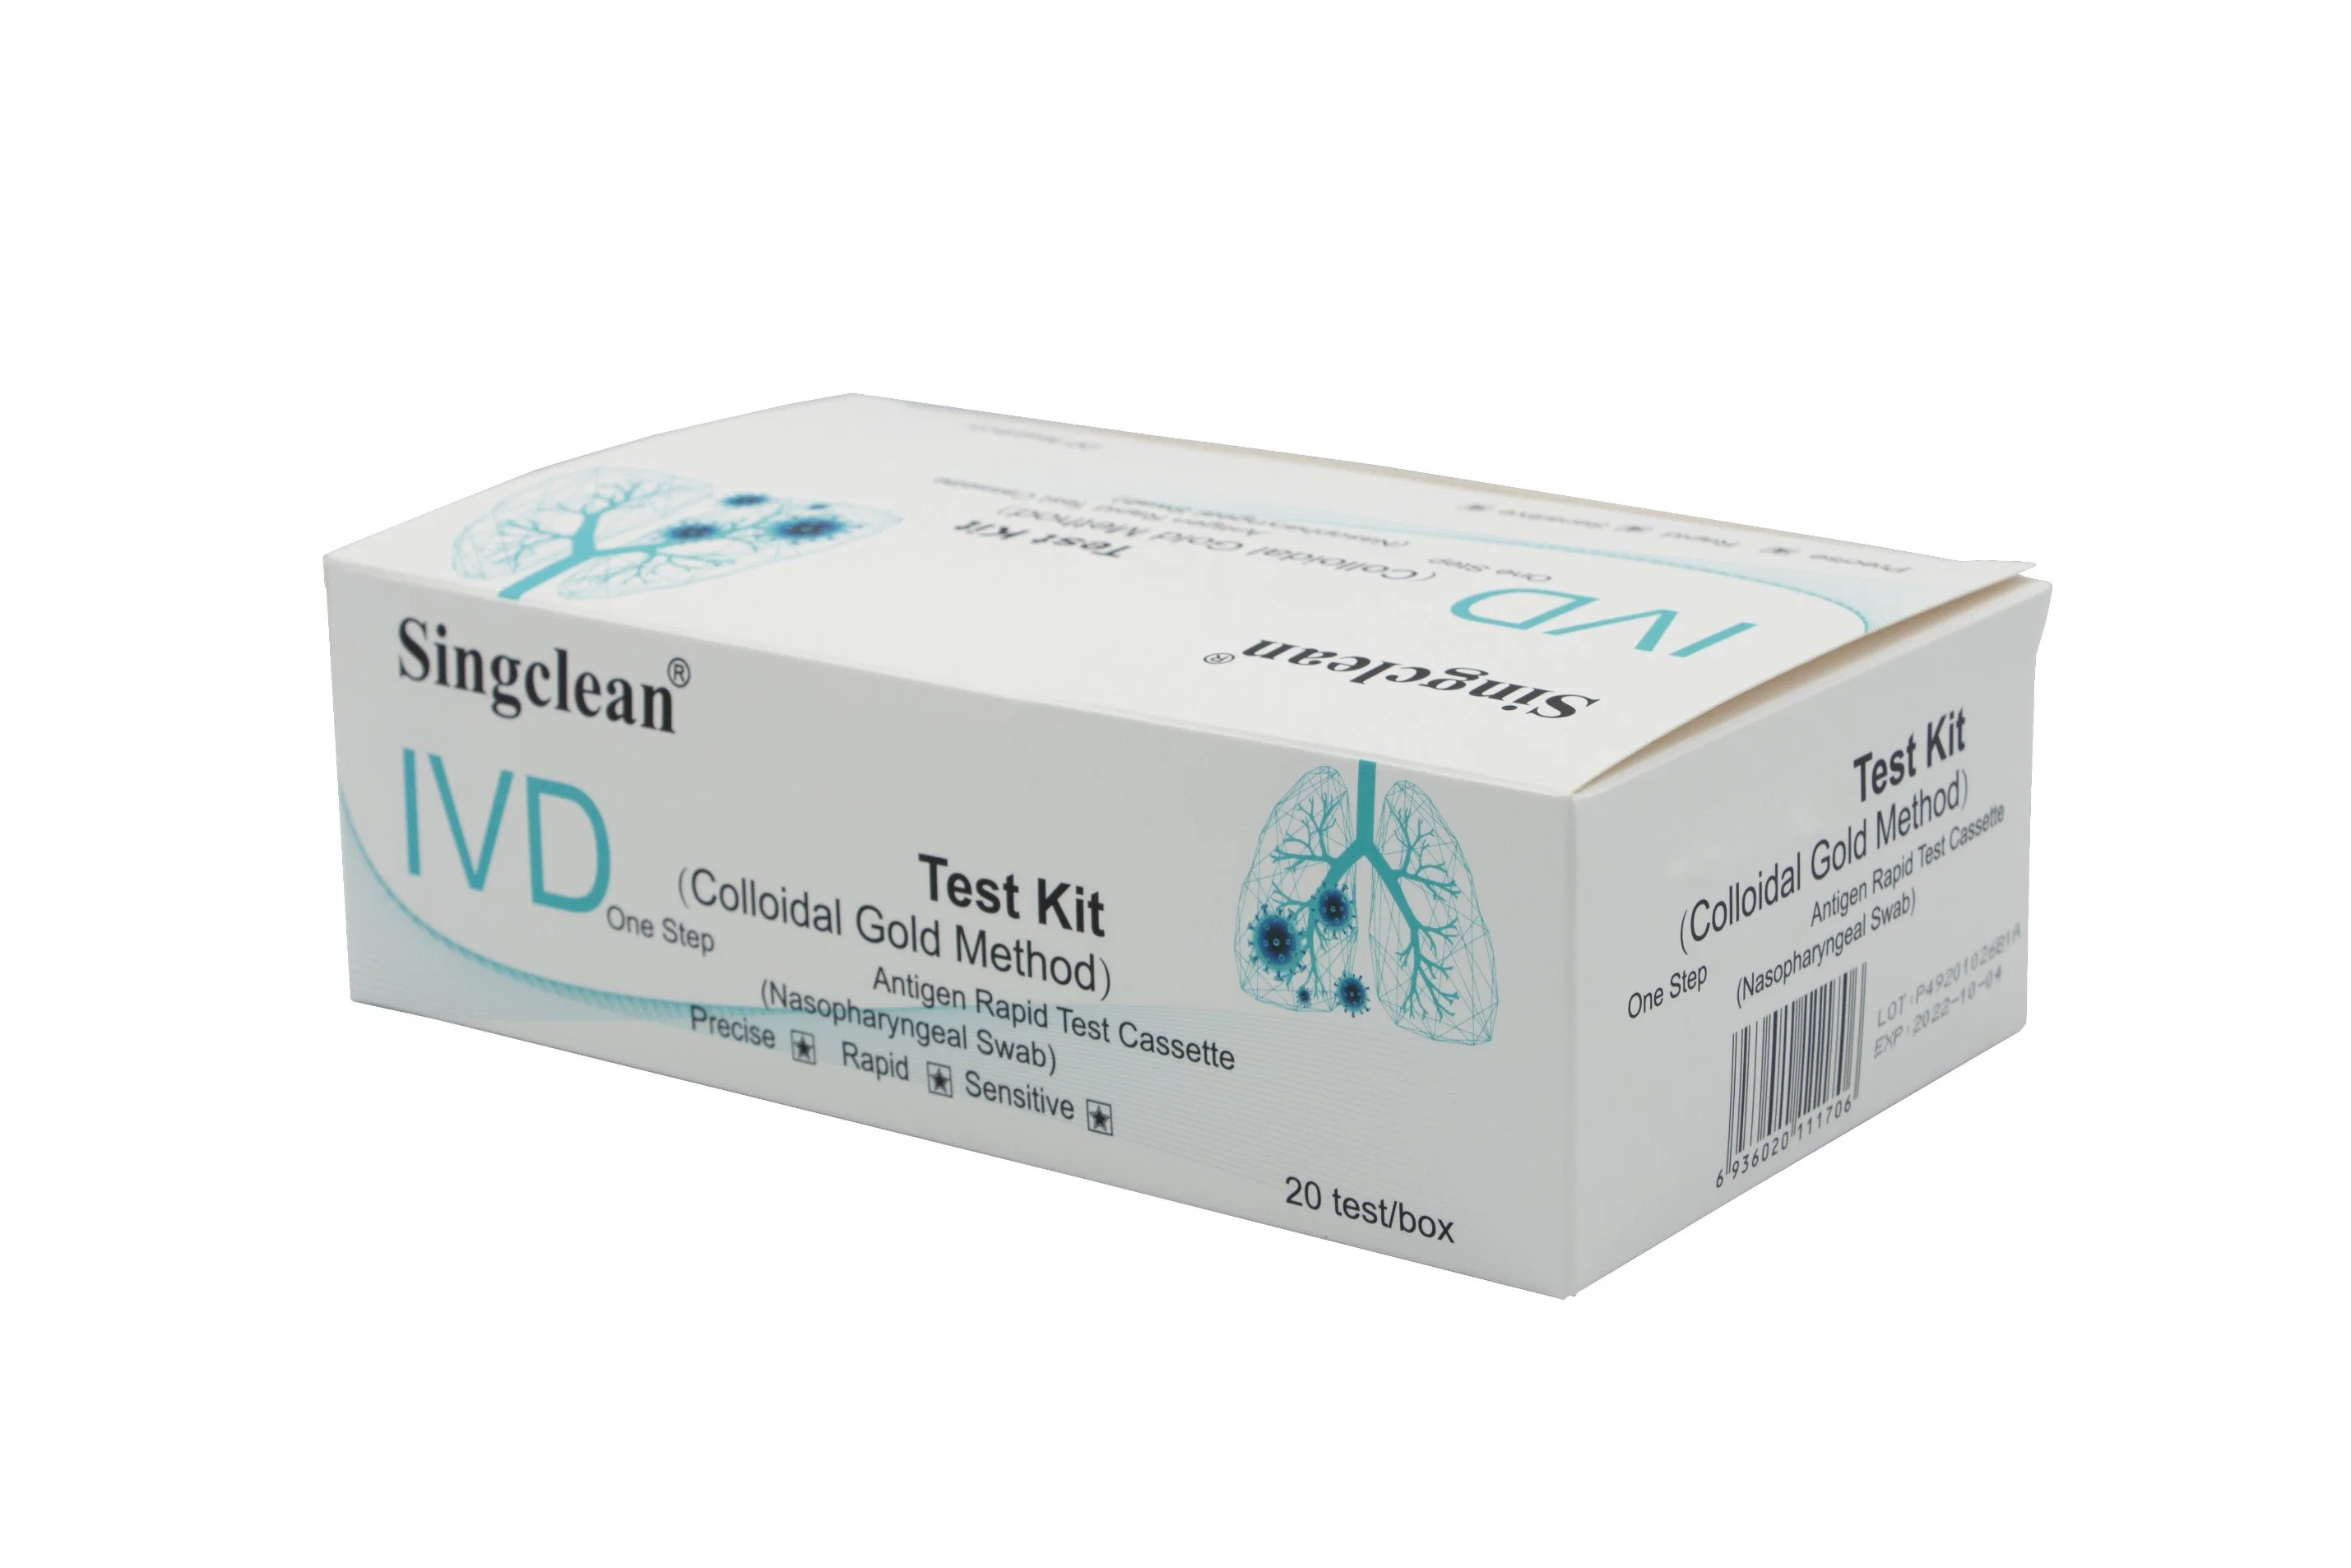 Kit de prueba Singclean casete, Kit de pruebas de diagnóstico de la prueba de diagnóstico rápido